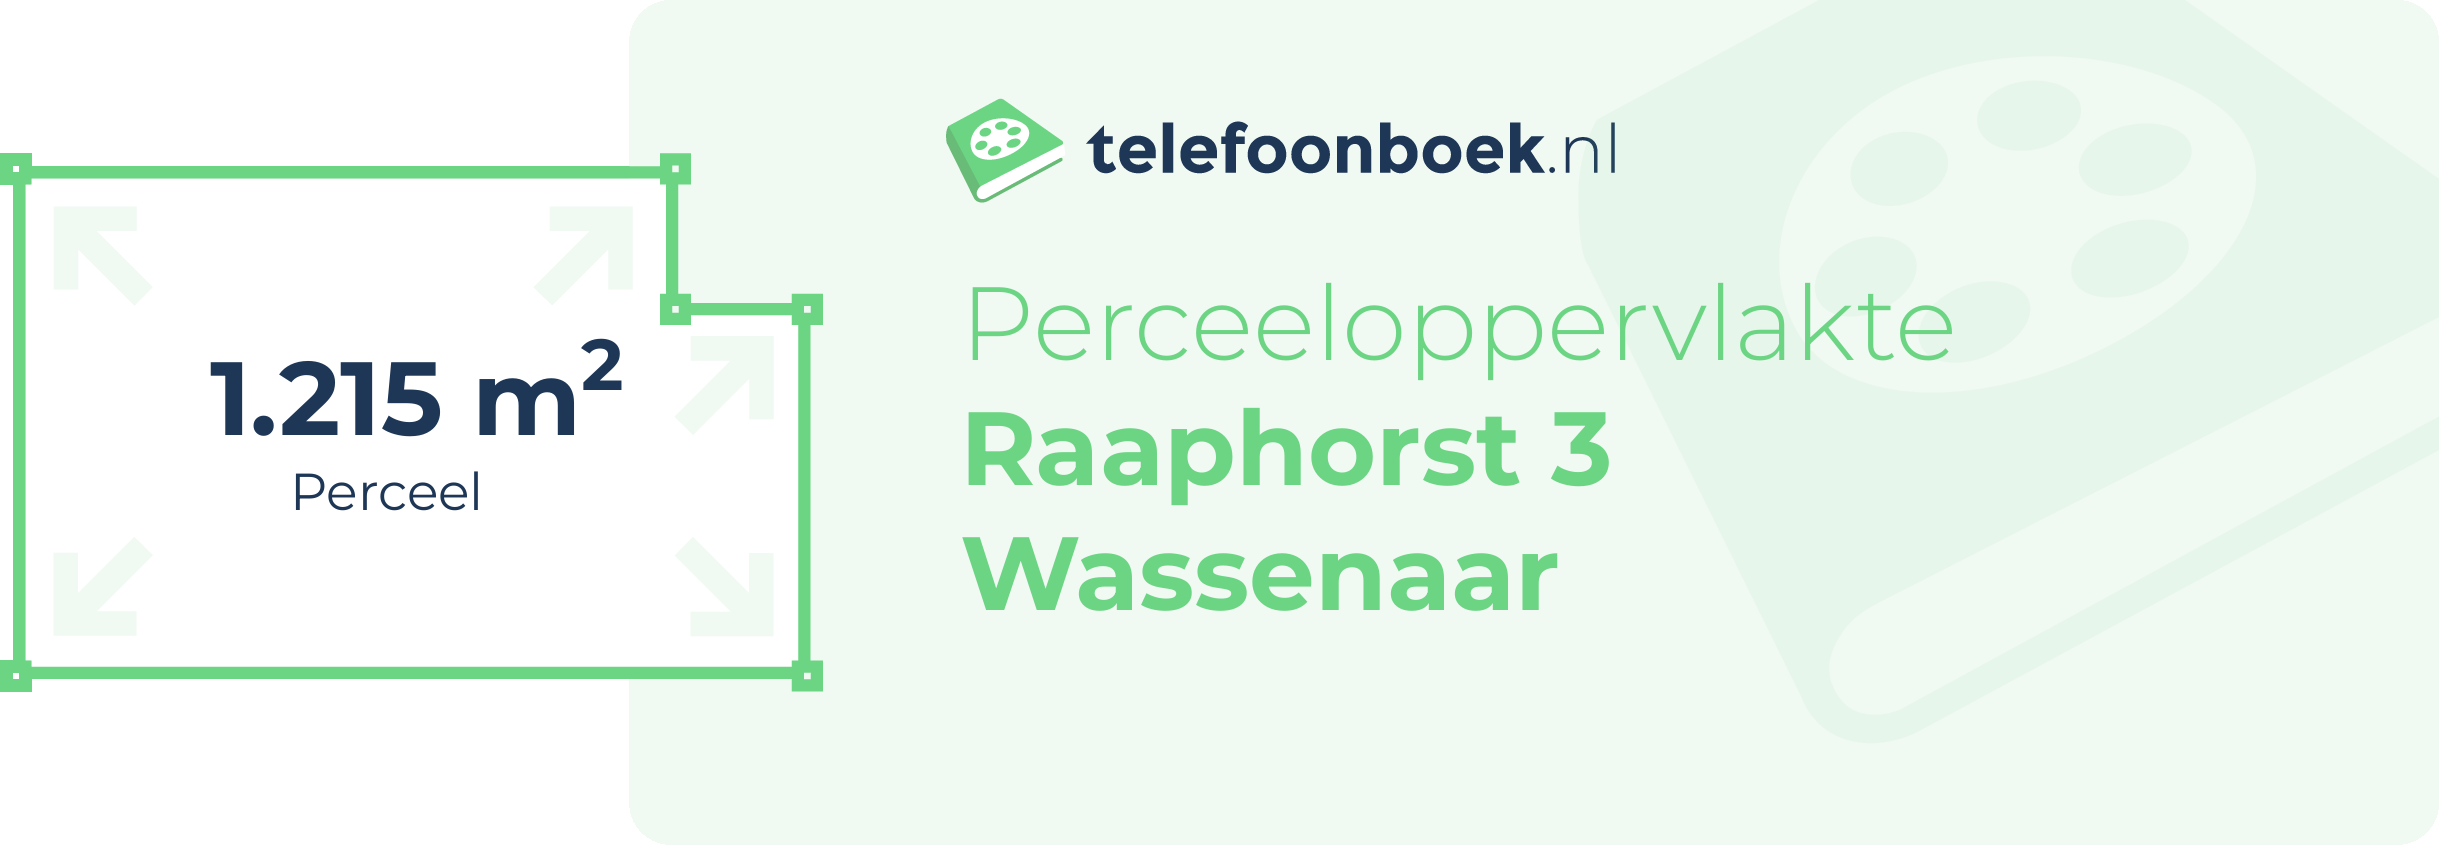 Perceeloppervlakte Raaphorst 3 Wassenaar